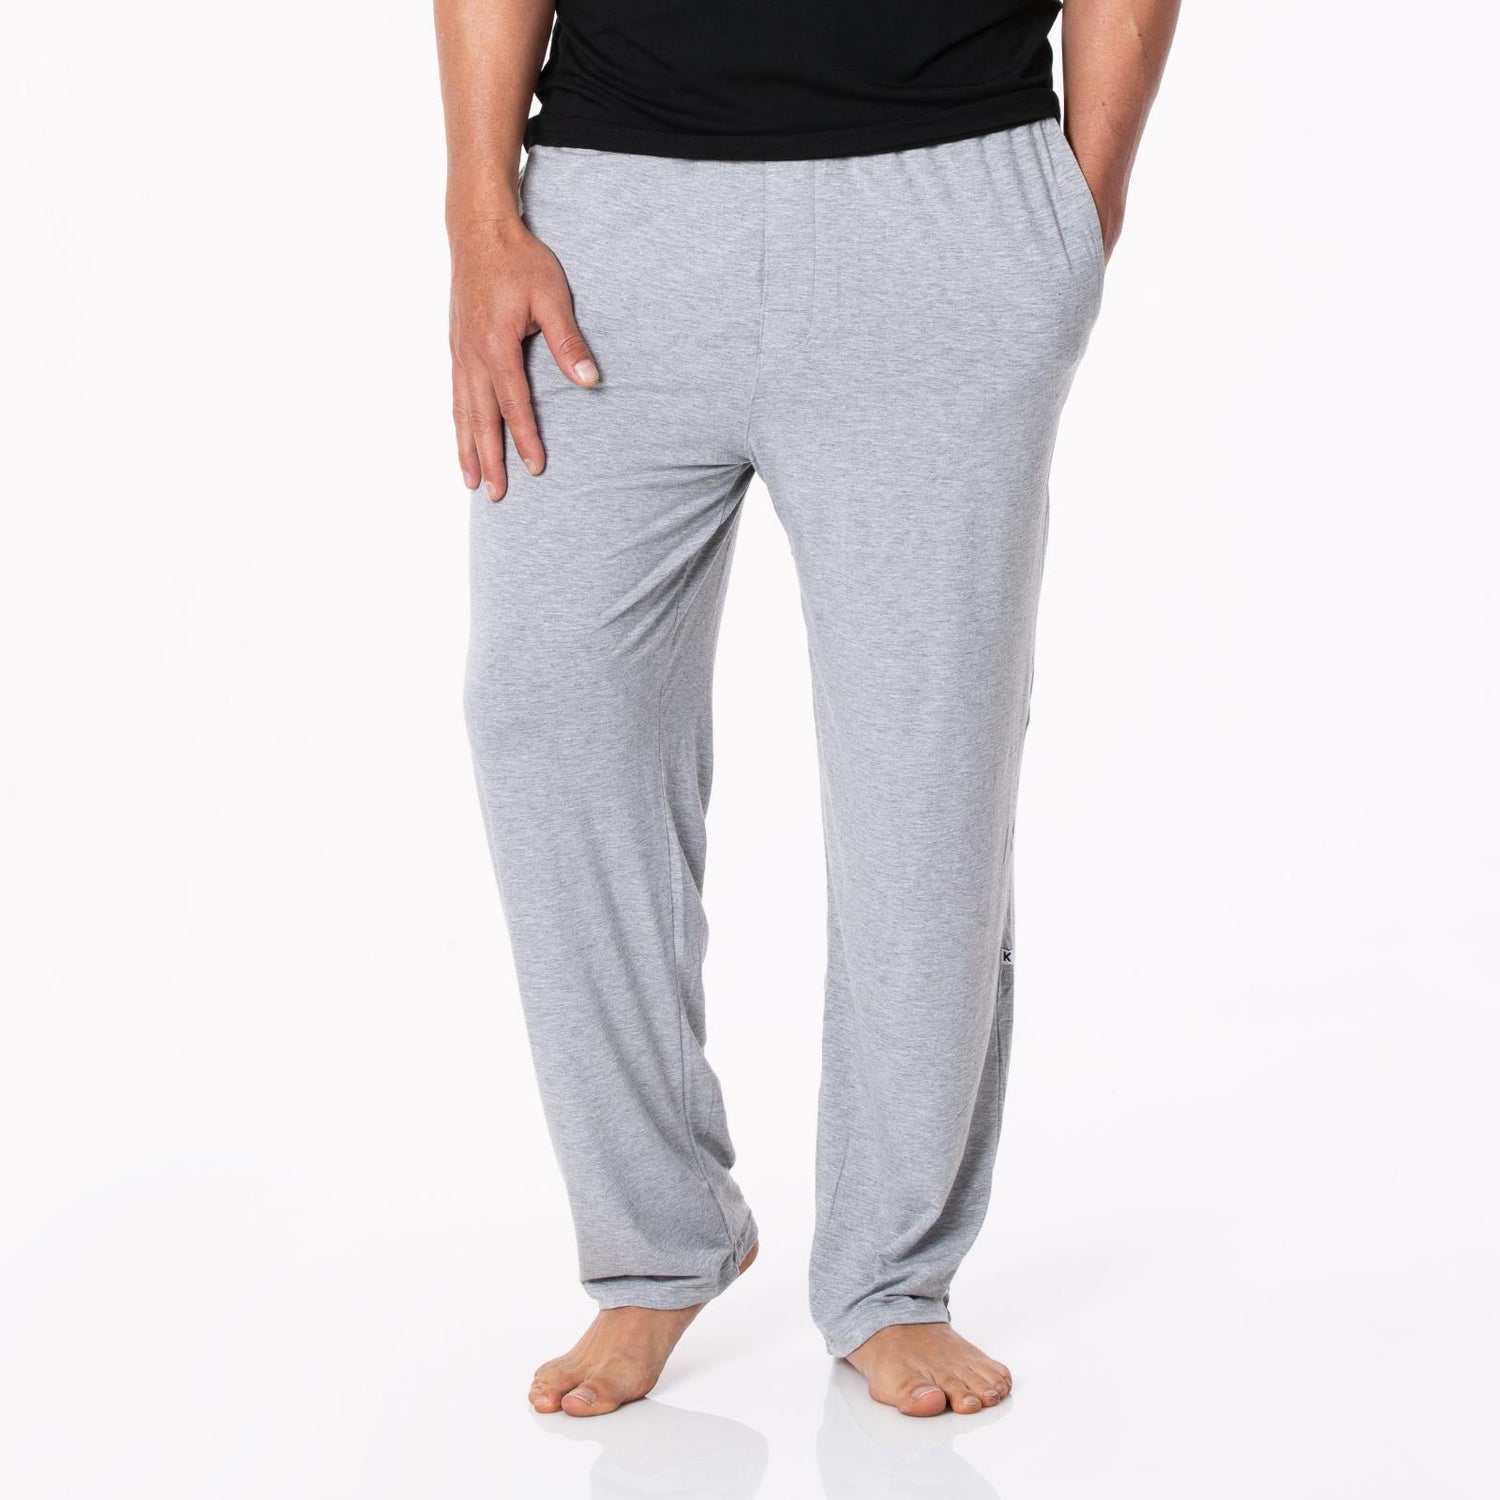 Men's Pajama Pants in Heathered Mist